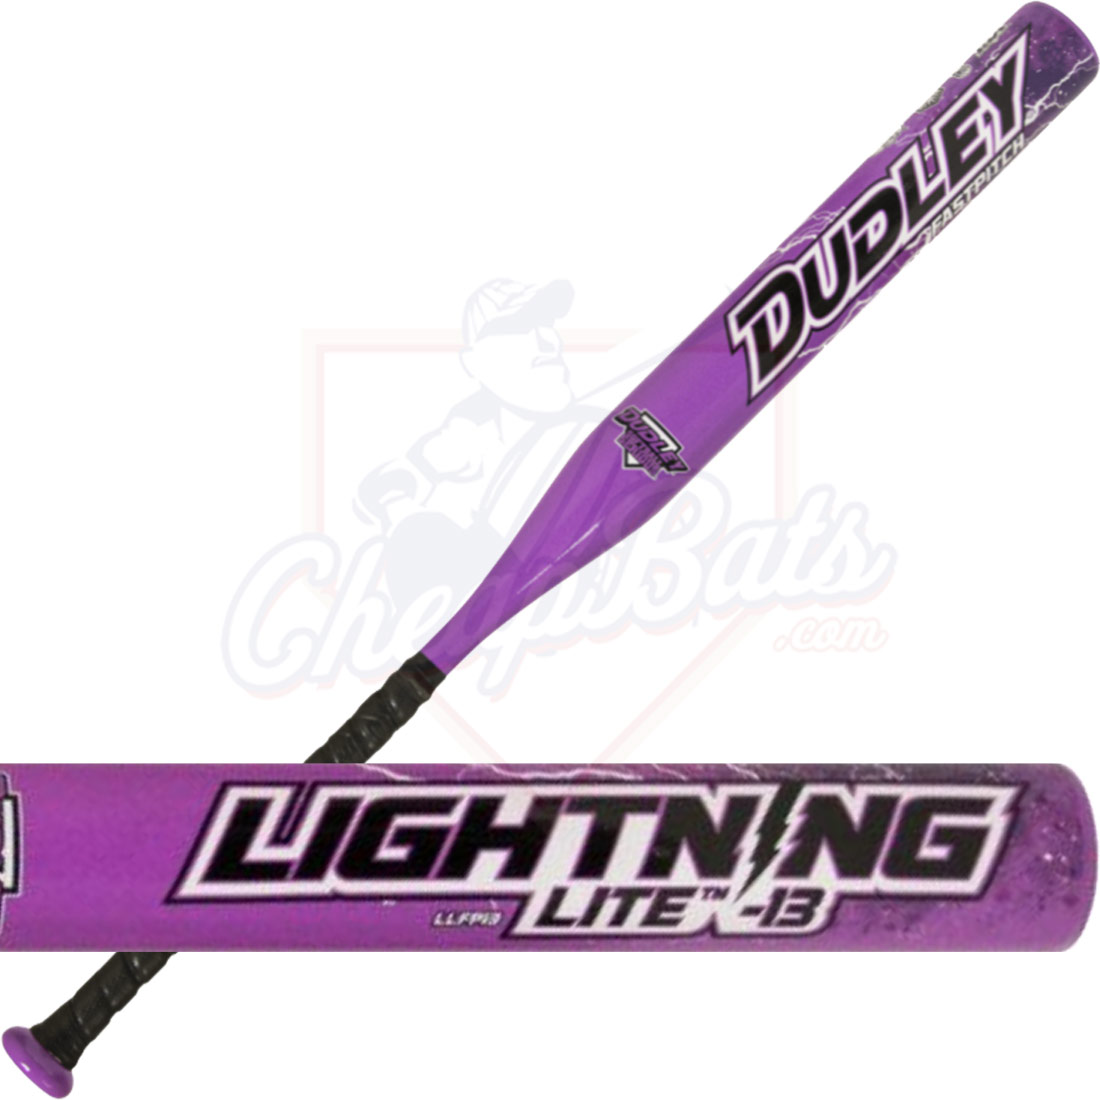 Dudley Lightning Lift Fastpitch Softball Bat -13oz LLFP13